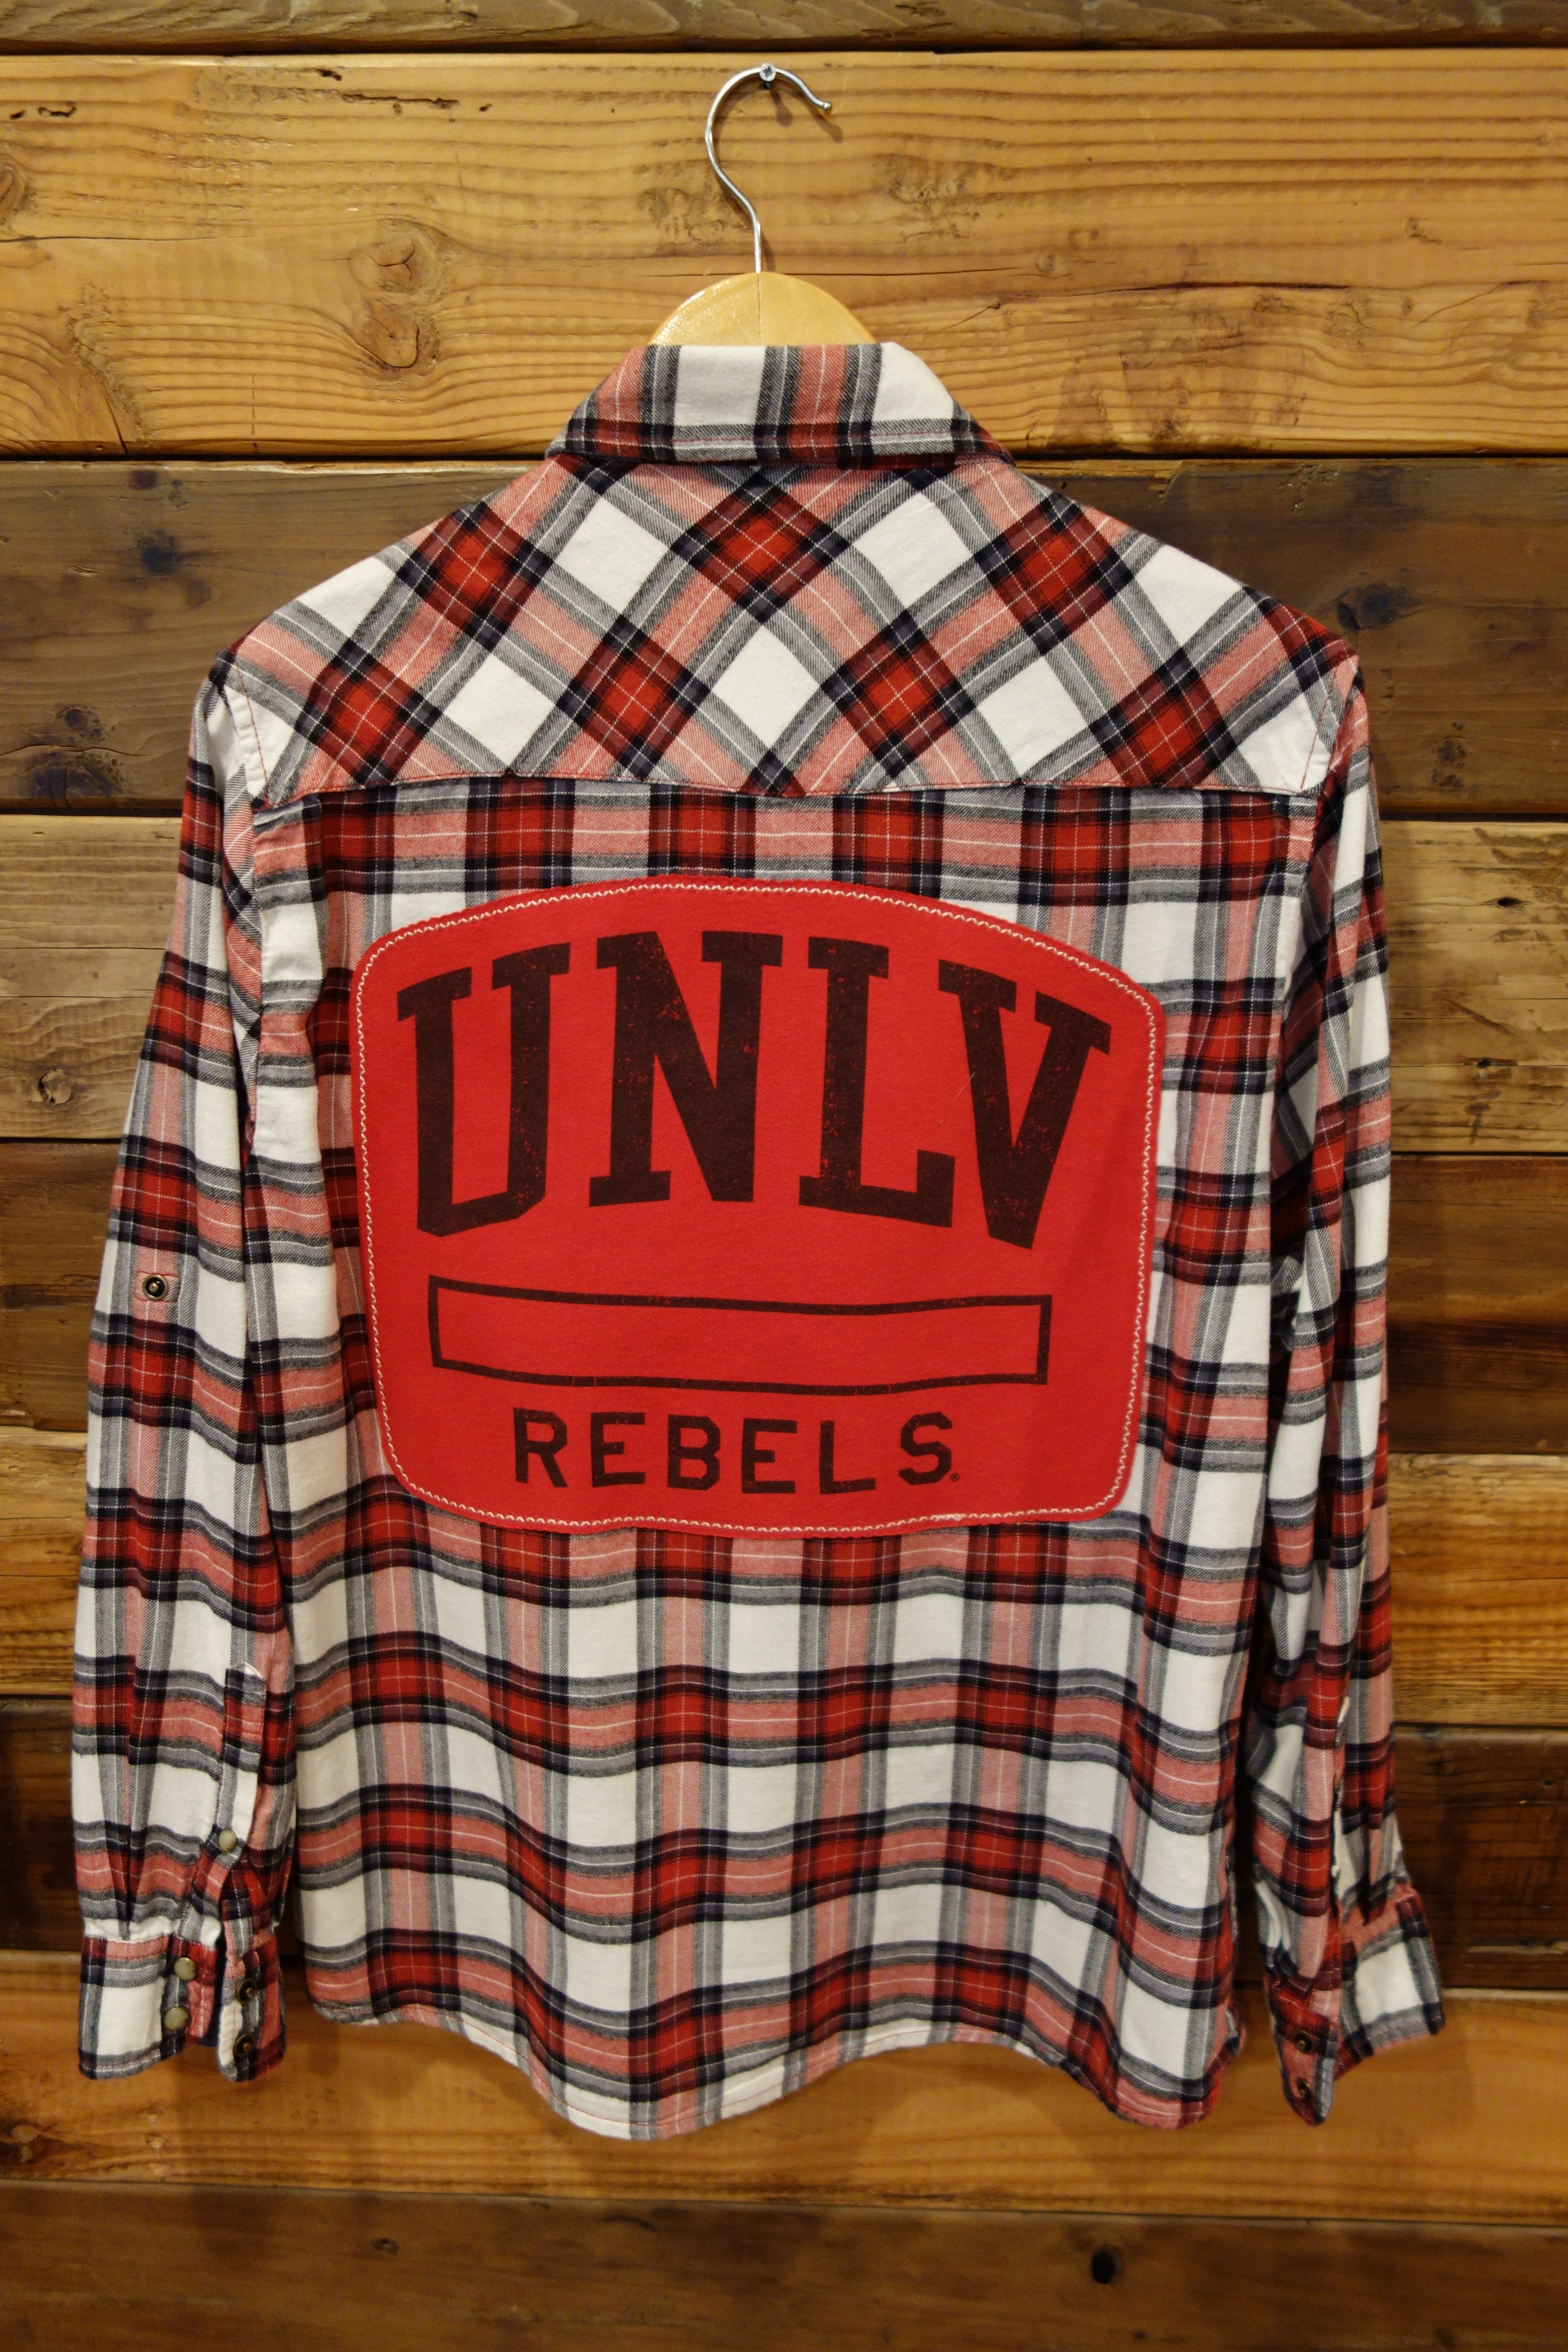 UNLV Rebels Las Vegas one of a kind Jach's Girlfriend vintage flannel shirt 